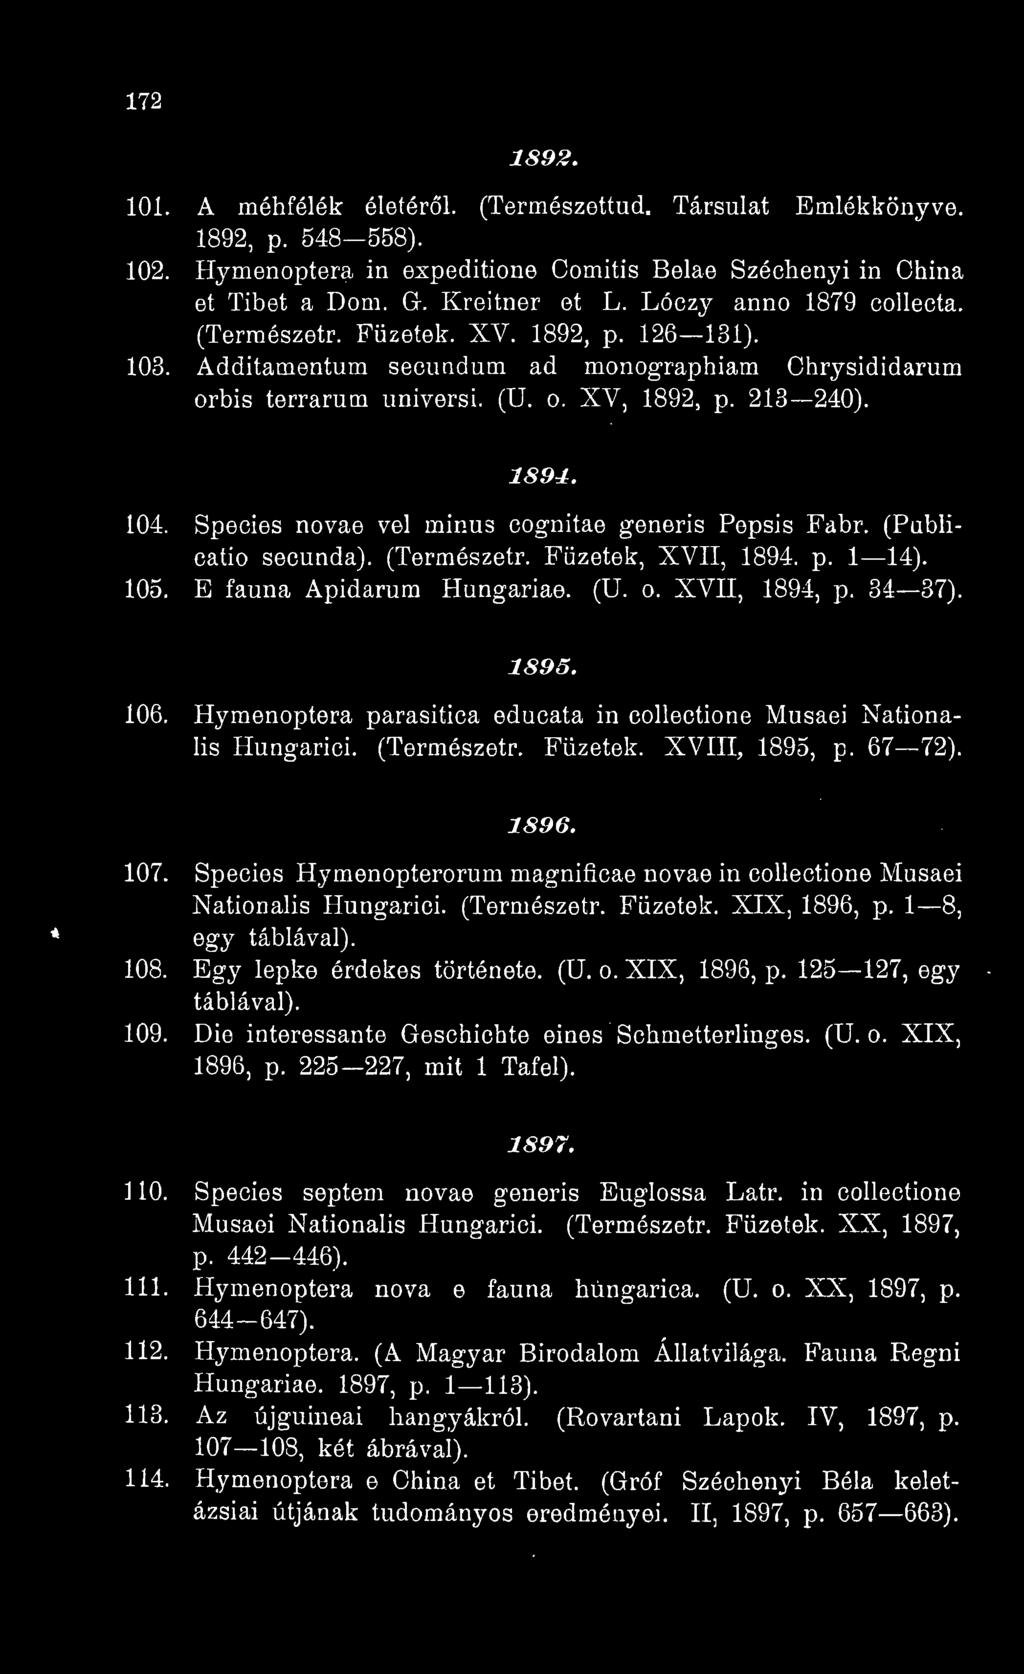 Species novae vei minus cognitae generis Pepsis Fabr. (Publicatio secunda). (Természetr. Füzetek, XVII, 1894. p. 1 14). 105. E fauna Apidarum Hungáriáé. (U. o. XVH, 1894, p. 34 37). 1895. 106.